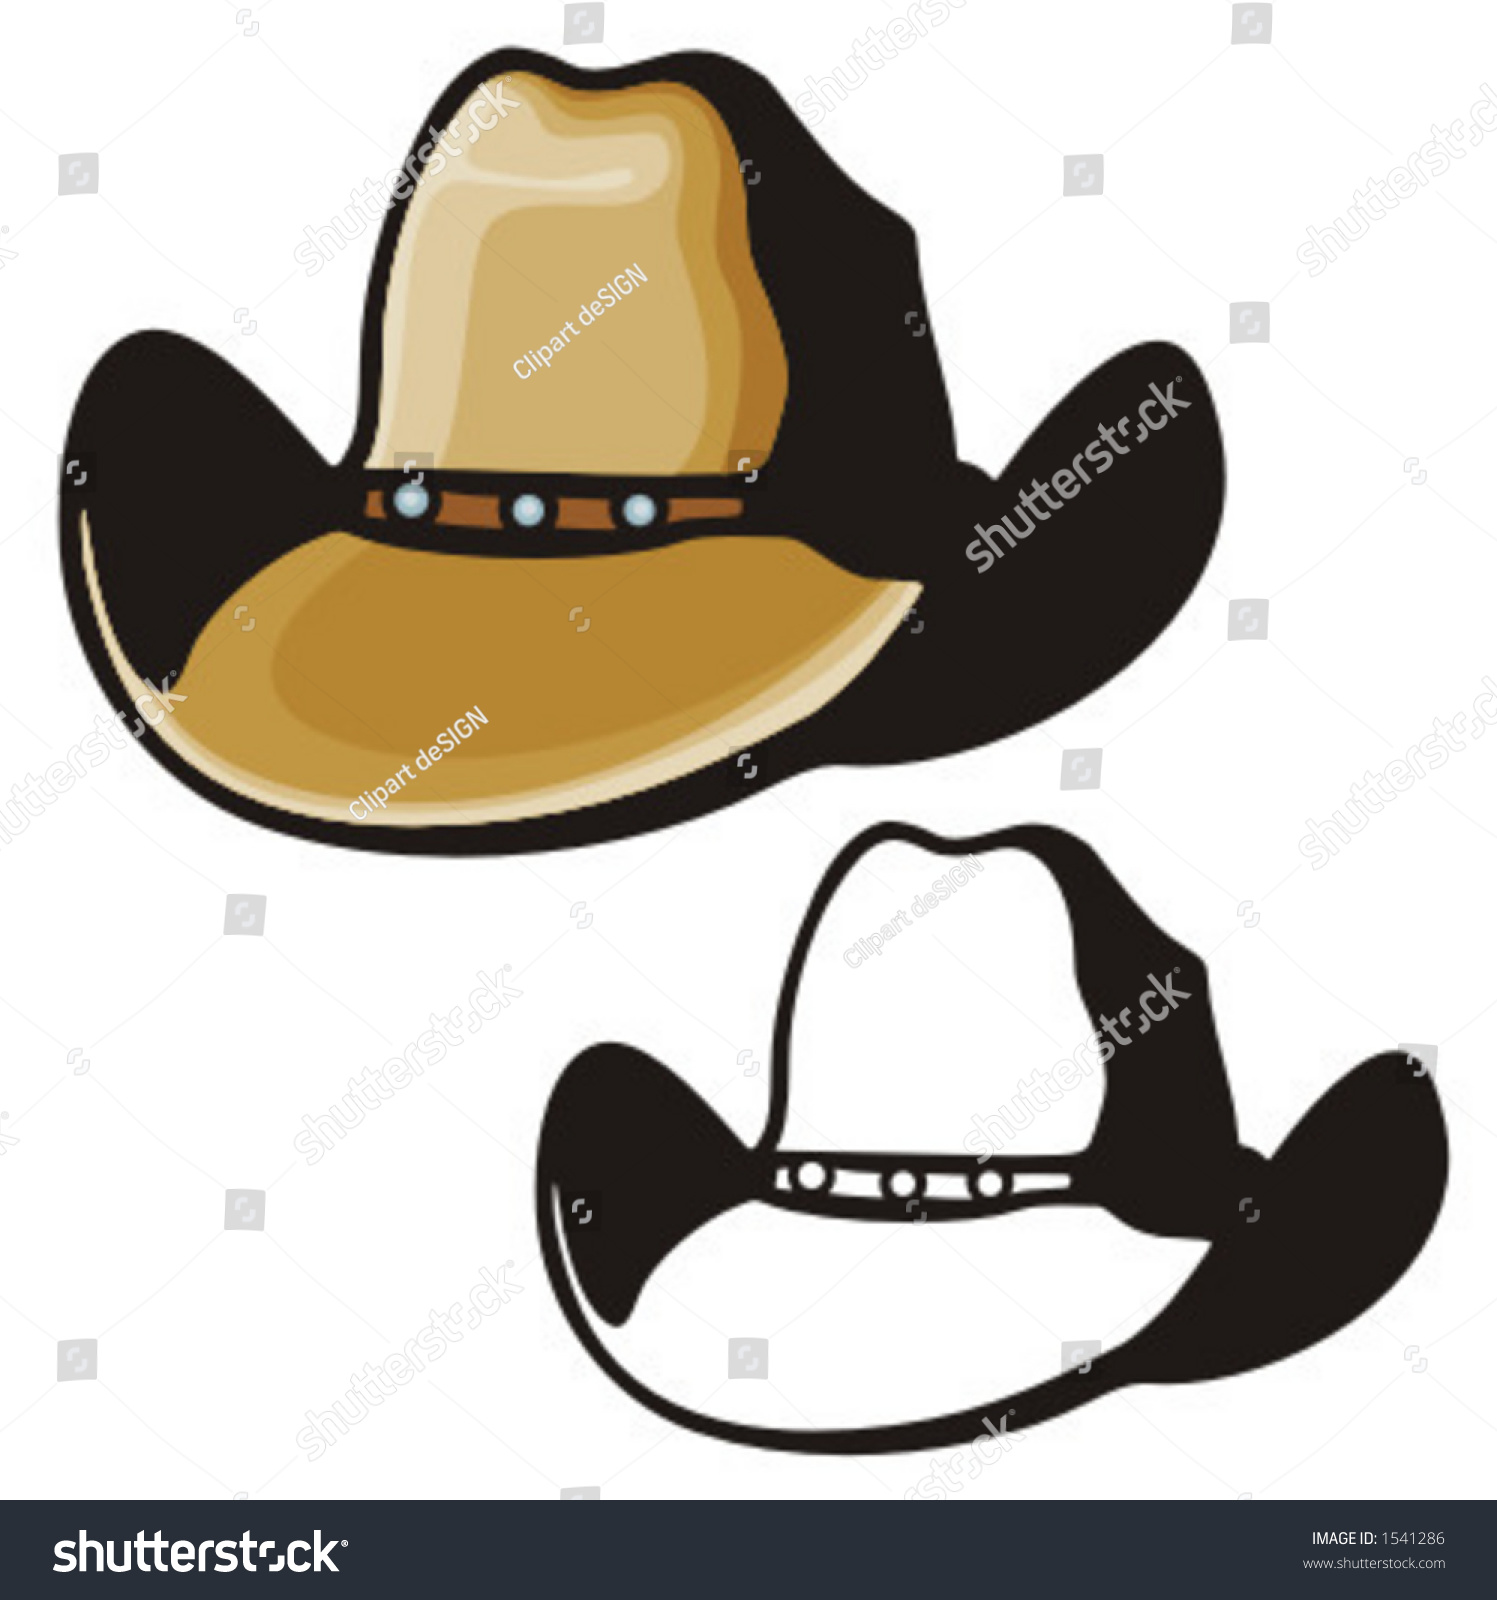 Illustration Of A Cowboy Hat. - 1541286 : Shutterstock